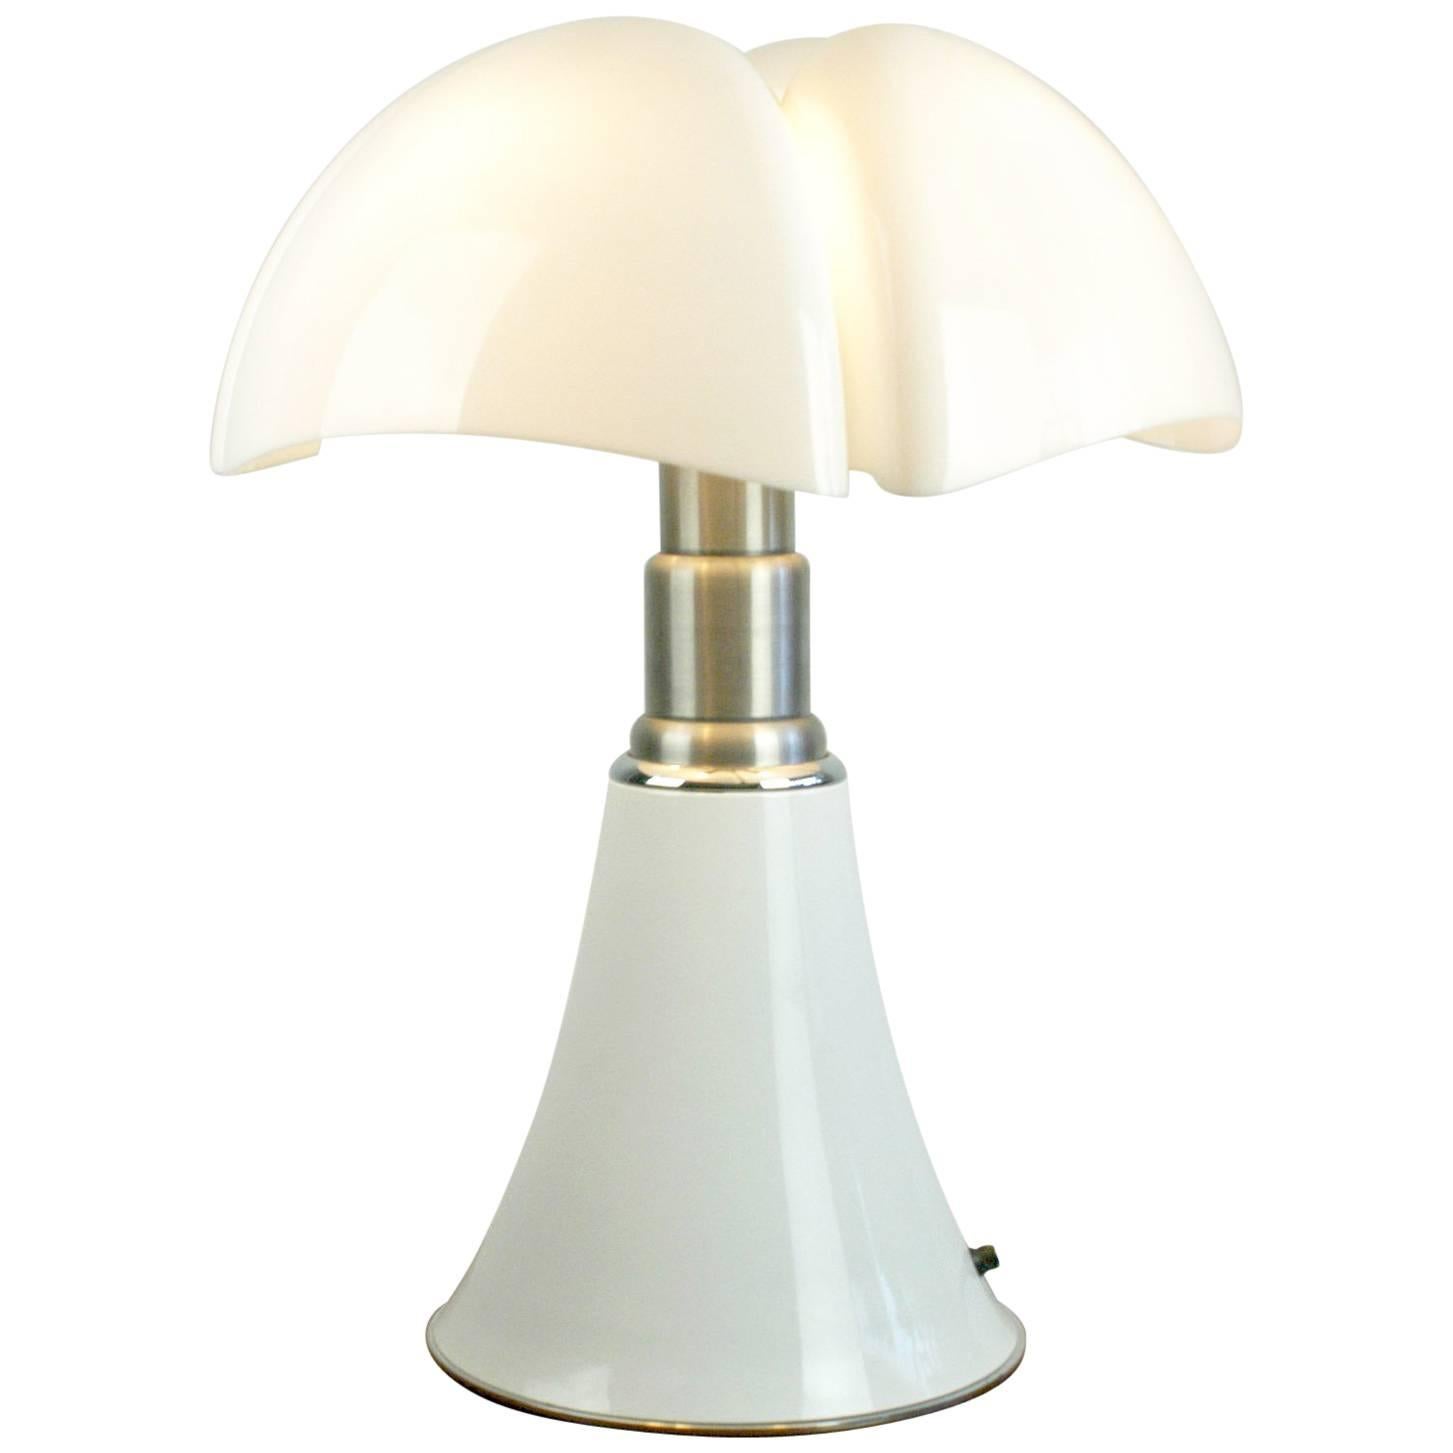 Italian 1960s White Table Lamp Pipistrello by Gae Aulenti for Martinelli Luce